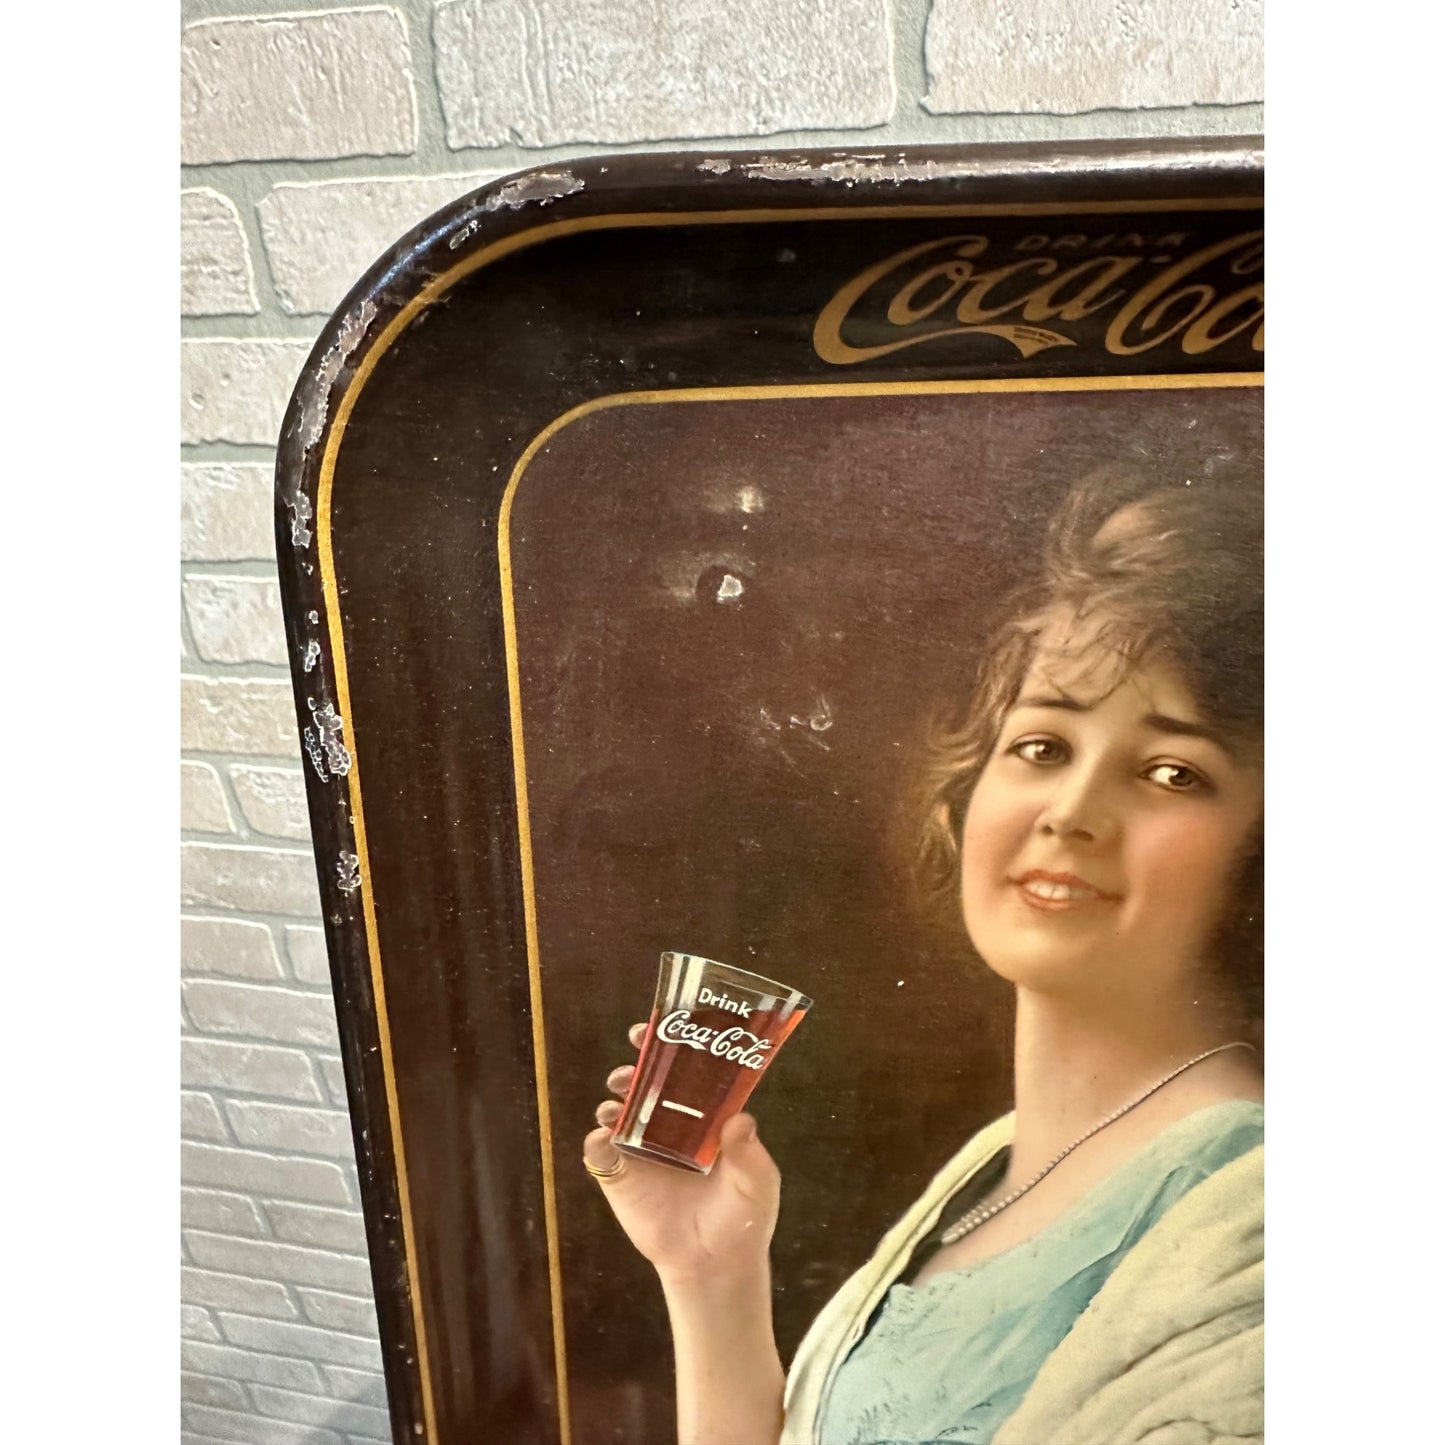 Original Coca Cola 1923 Flapper Girl Advertising Serving Tray Sign Antique